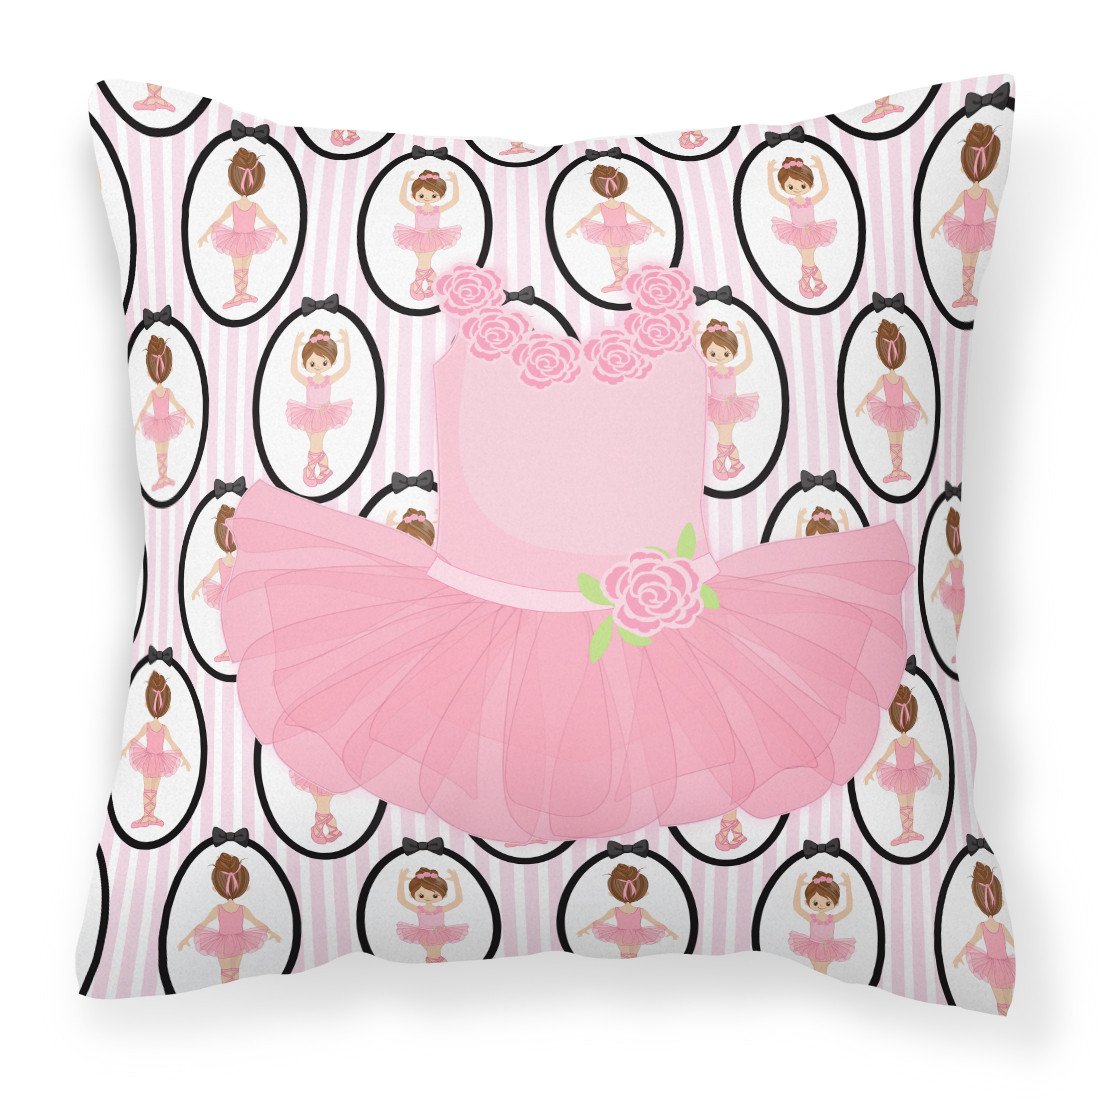 Ballerina Pink Tutu Fabric Decorative Pillow BB5153PW1818 by Caroline's Treasures